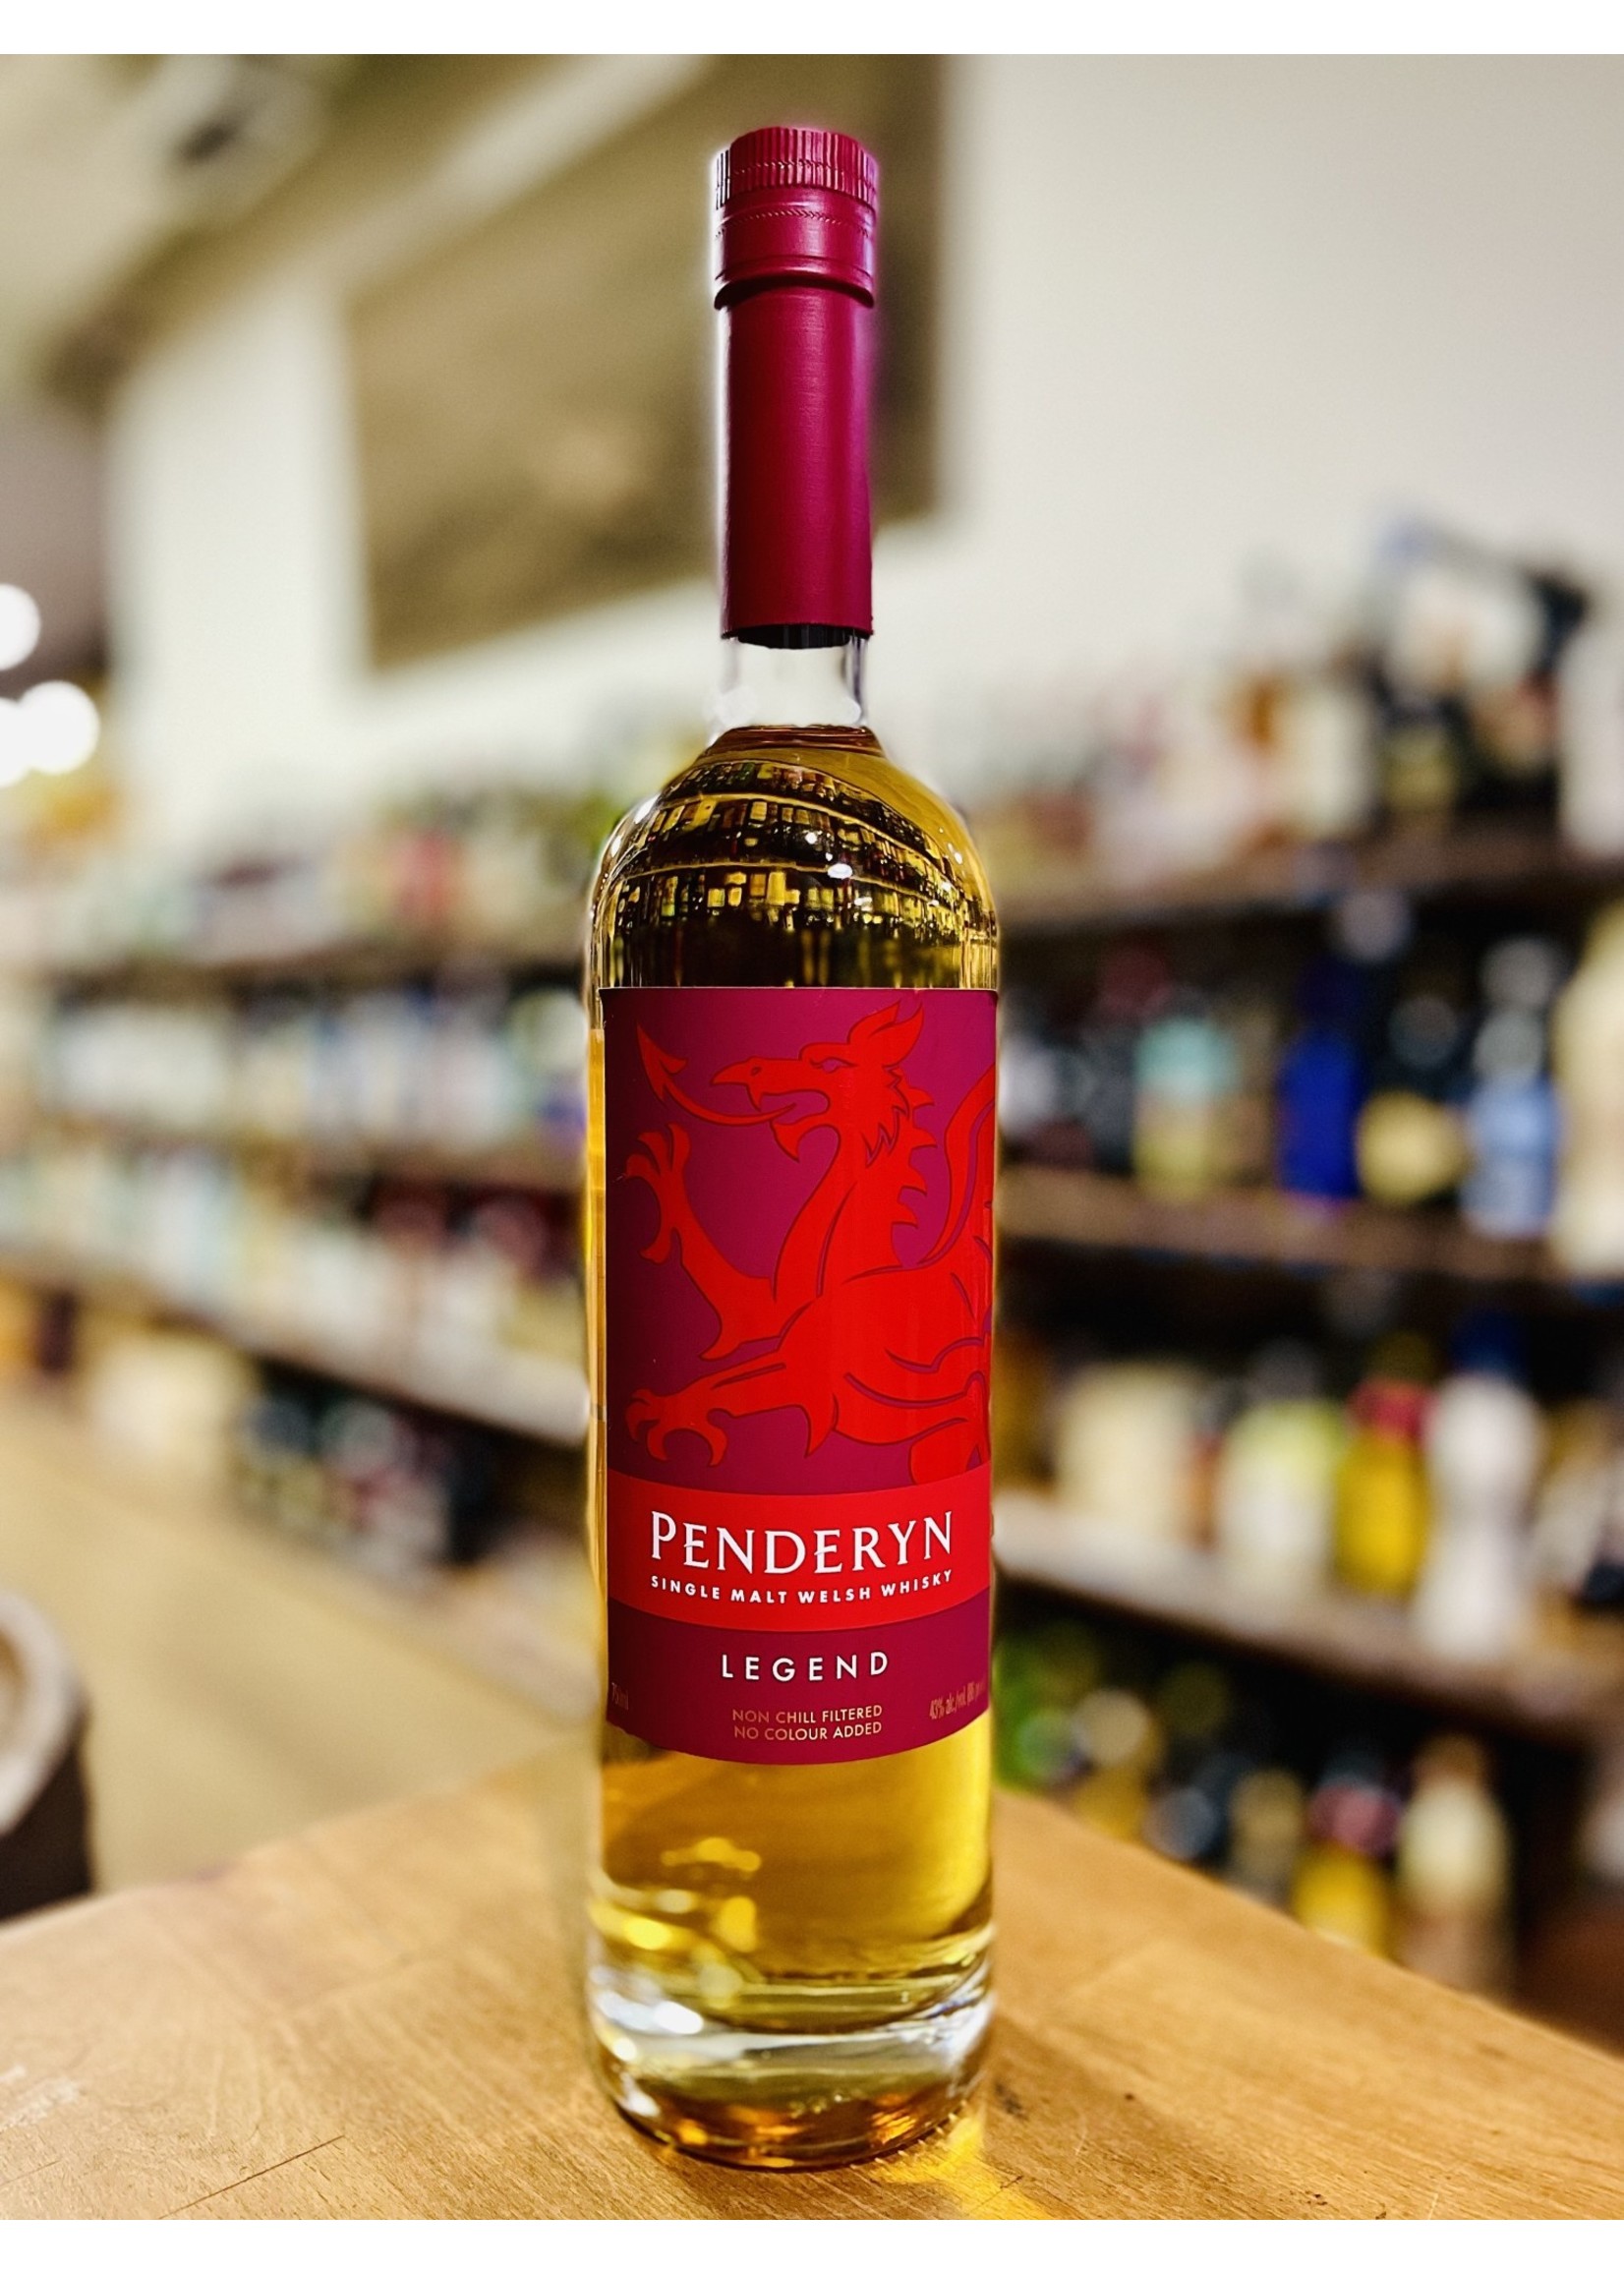 Penderyn Penderyn / Legend "Madeira Cask Finish" Single Malt Welsh Whisky 43% abv / 750mL